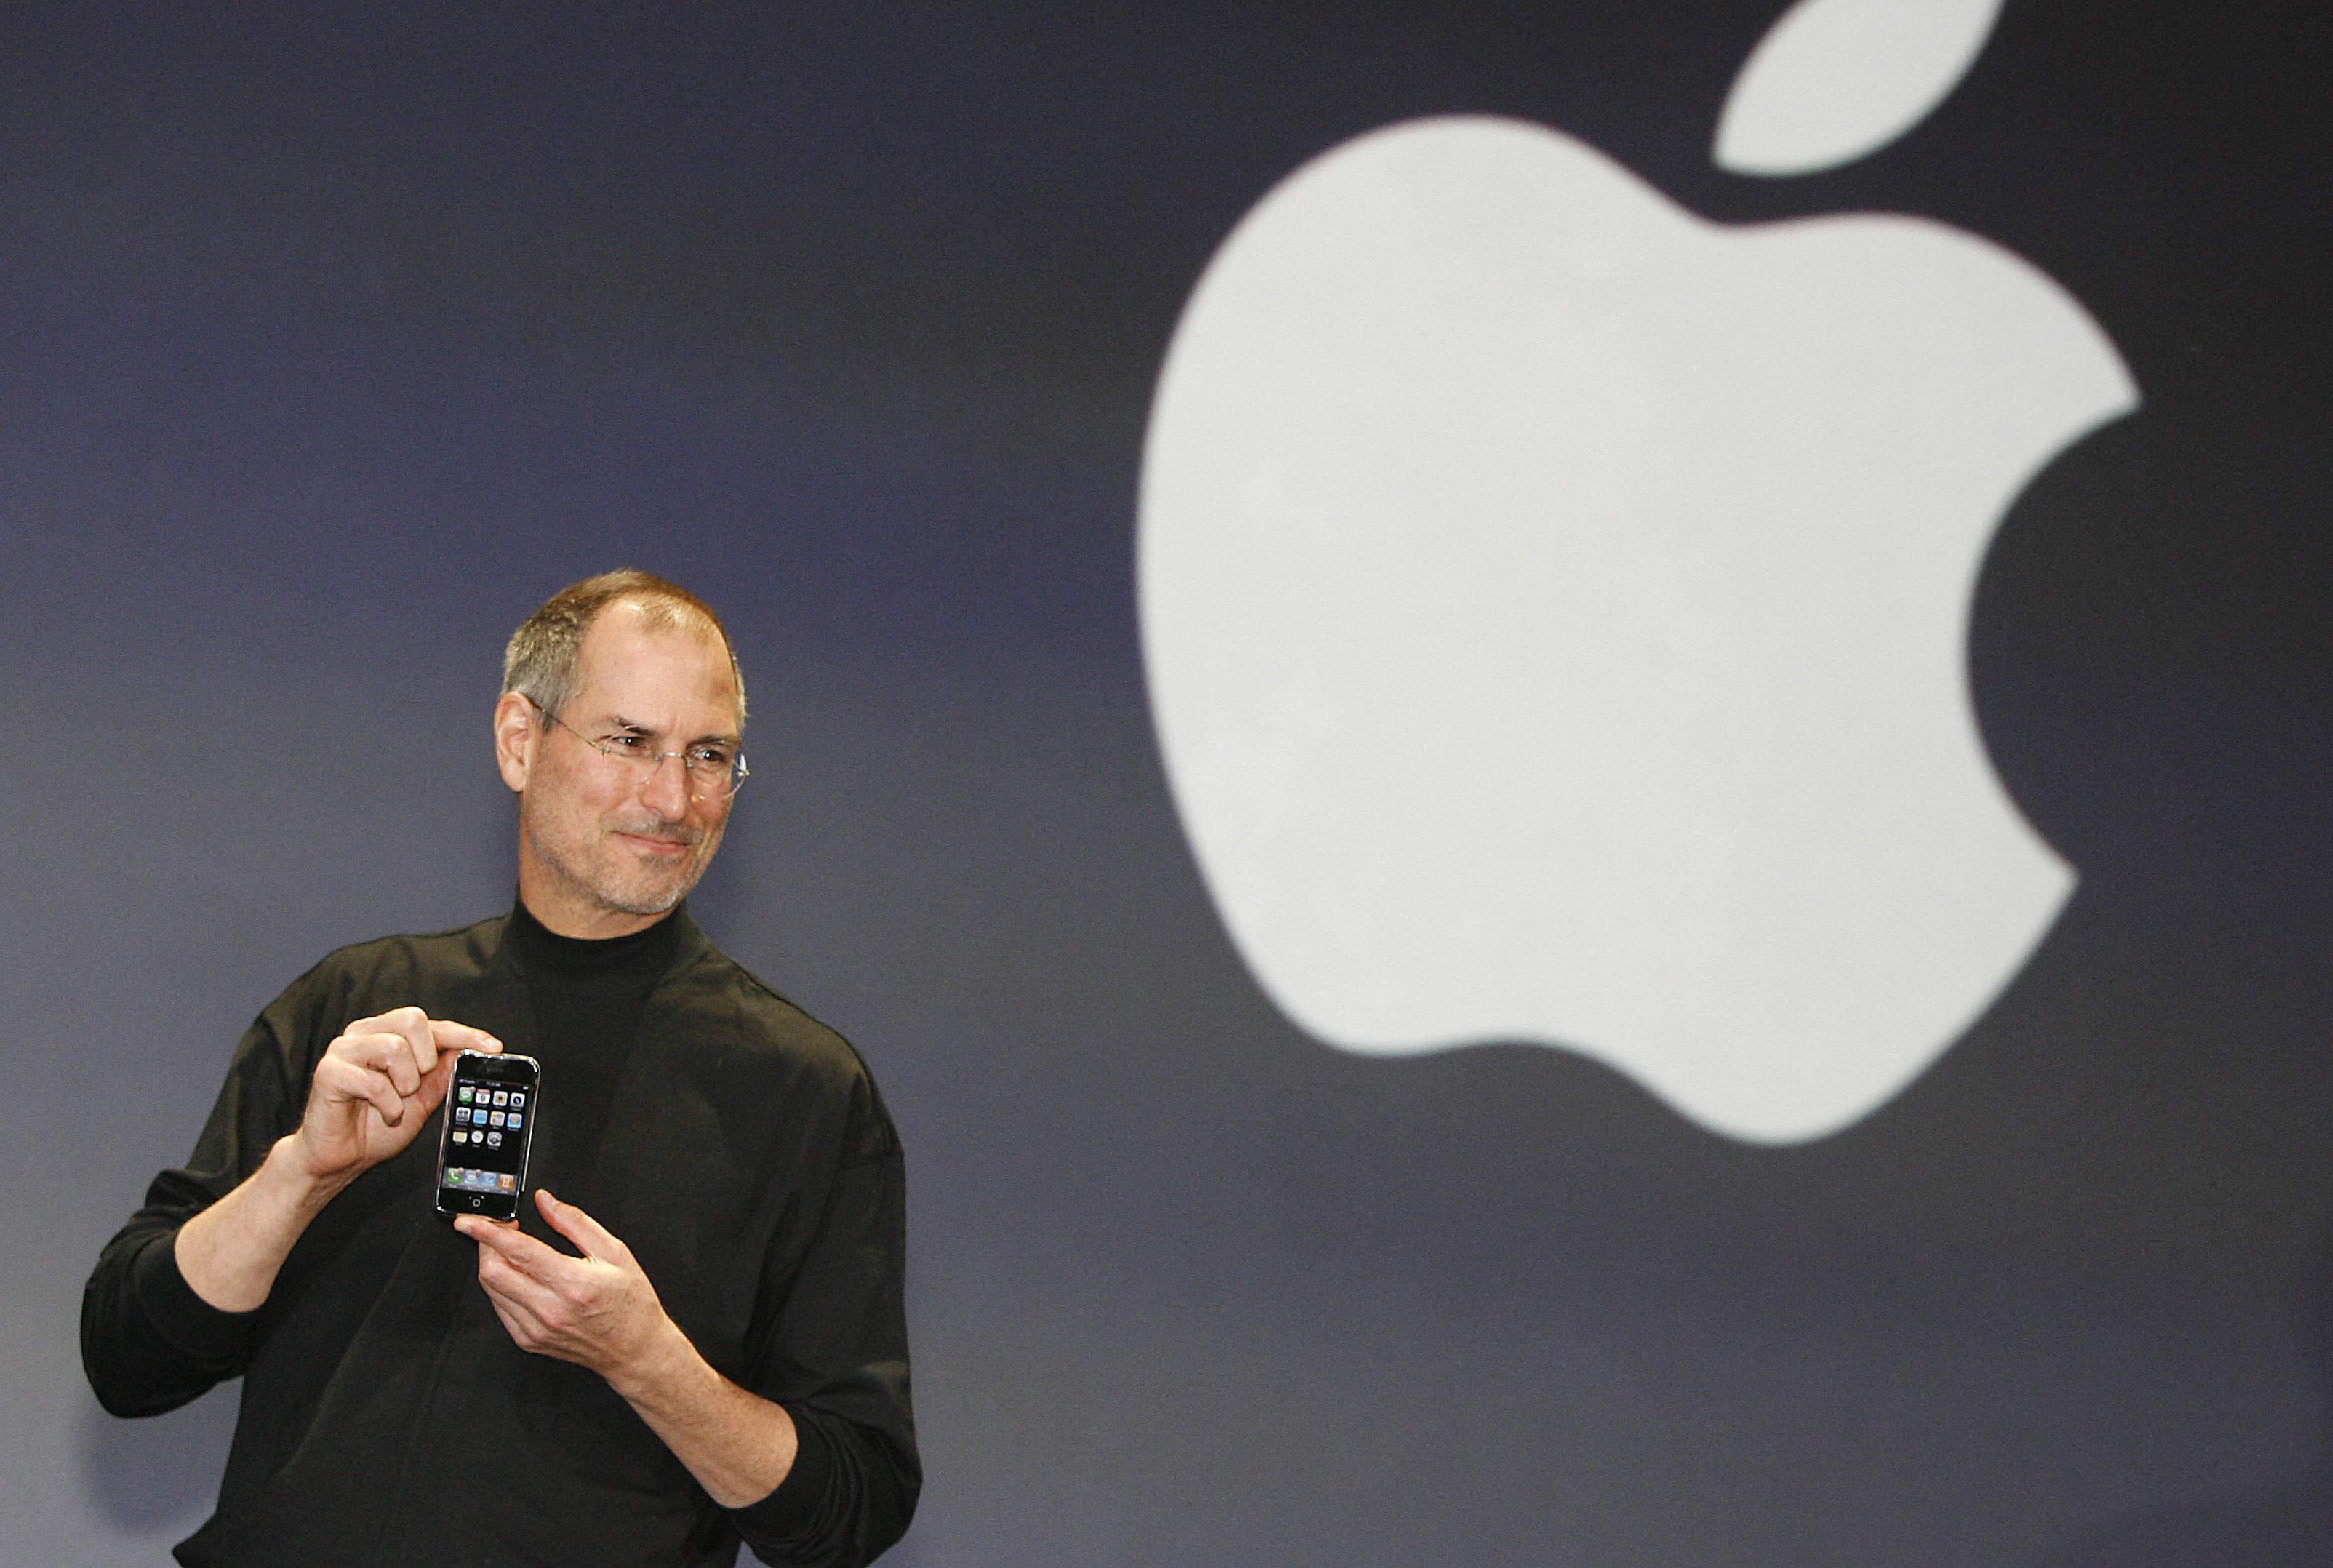 Apple chief executive Steve Jobs unveils